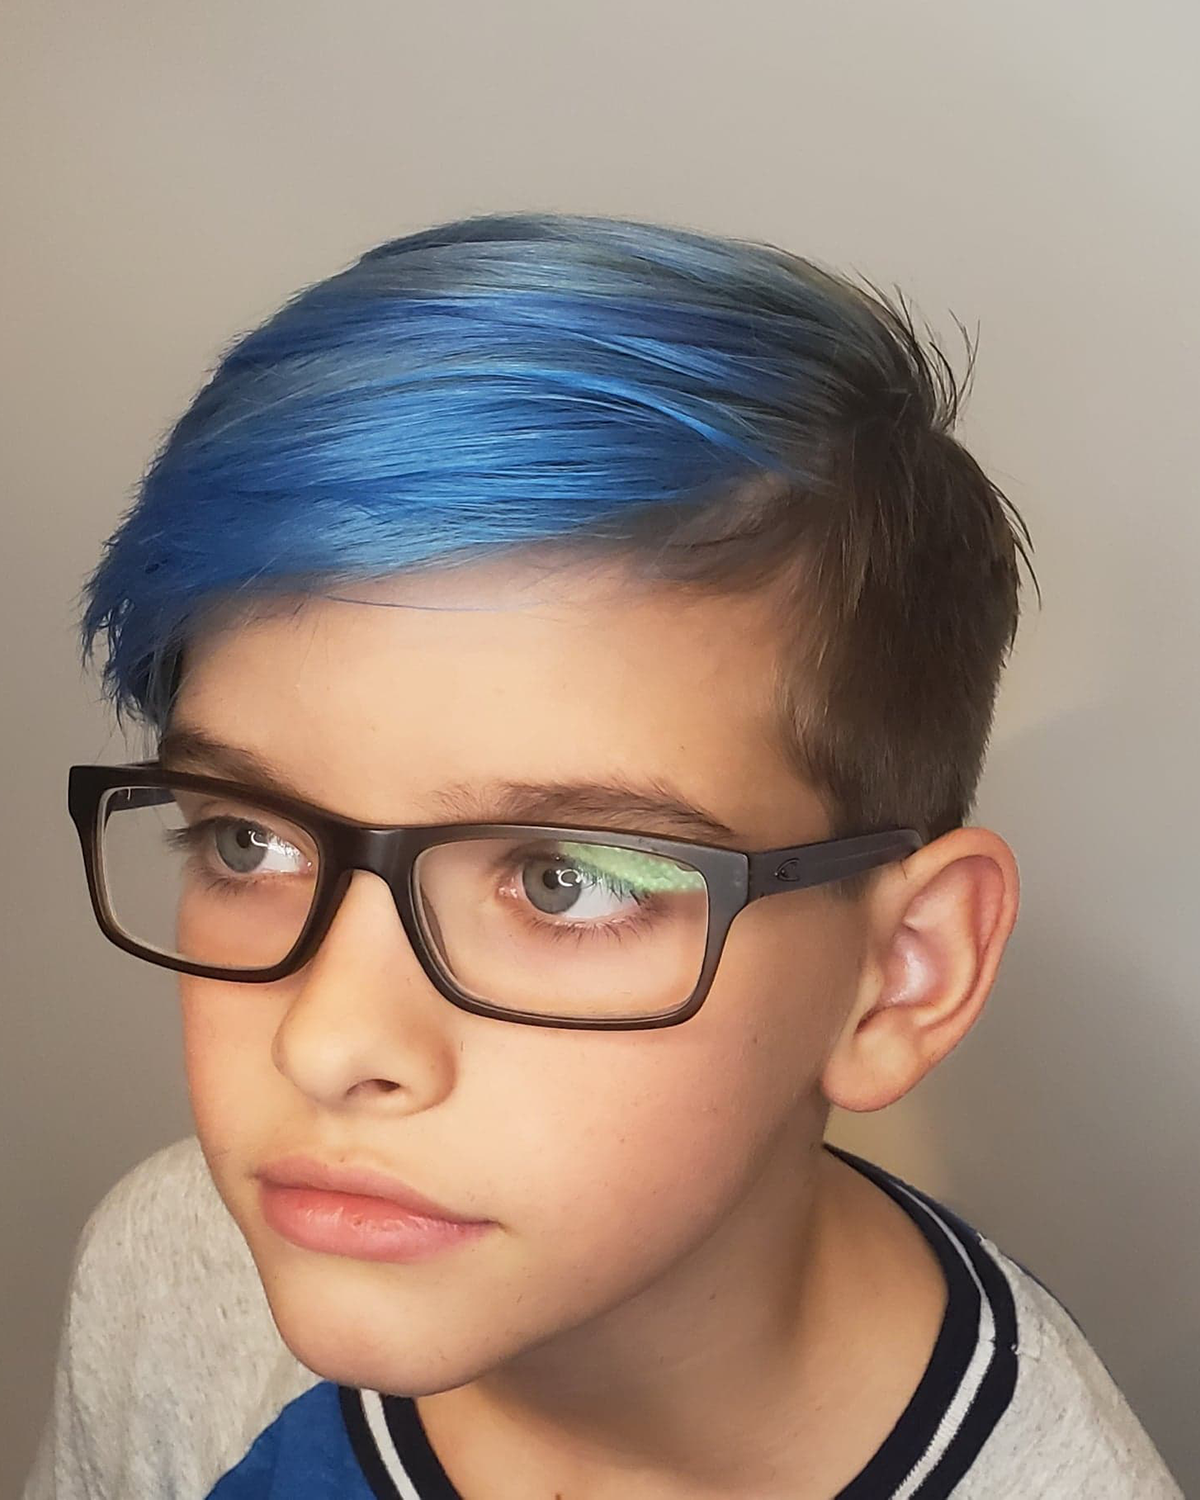 Boy With Blue Hair